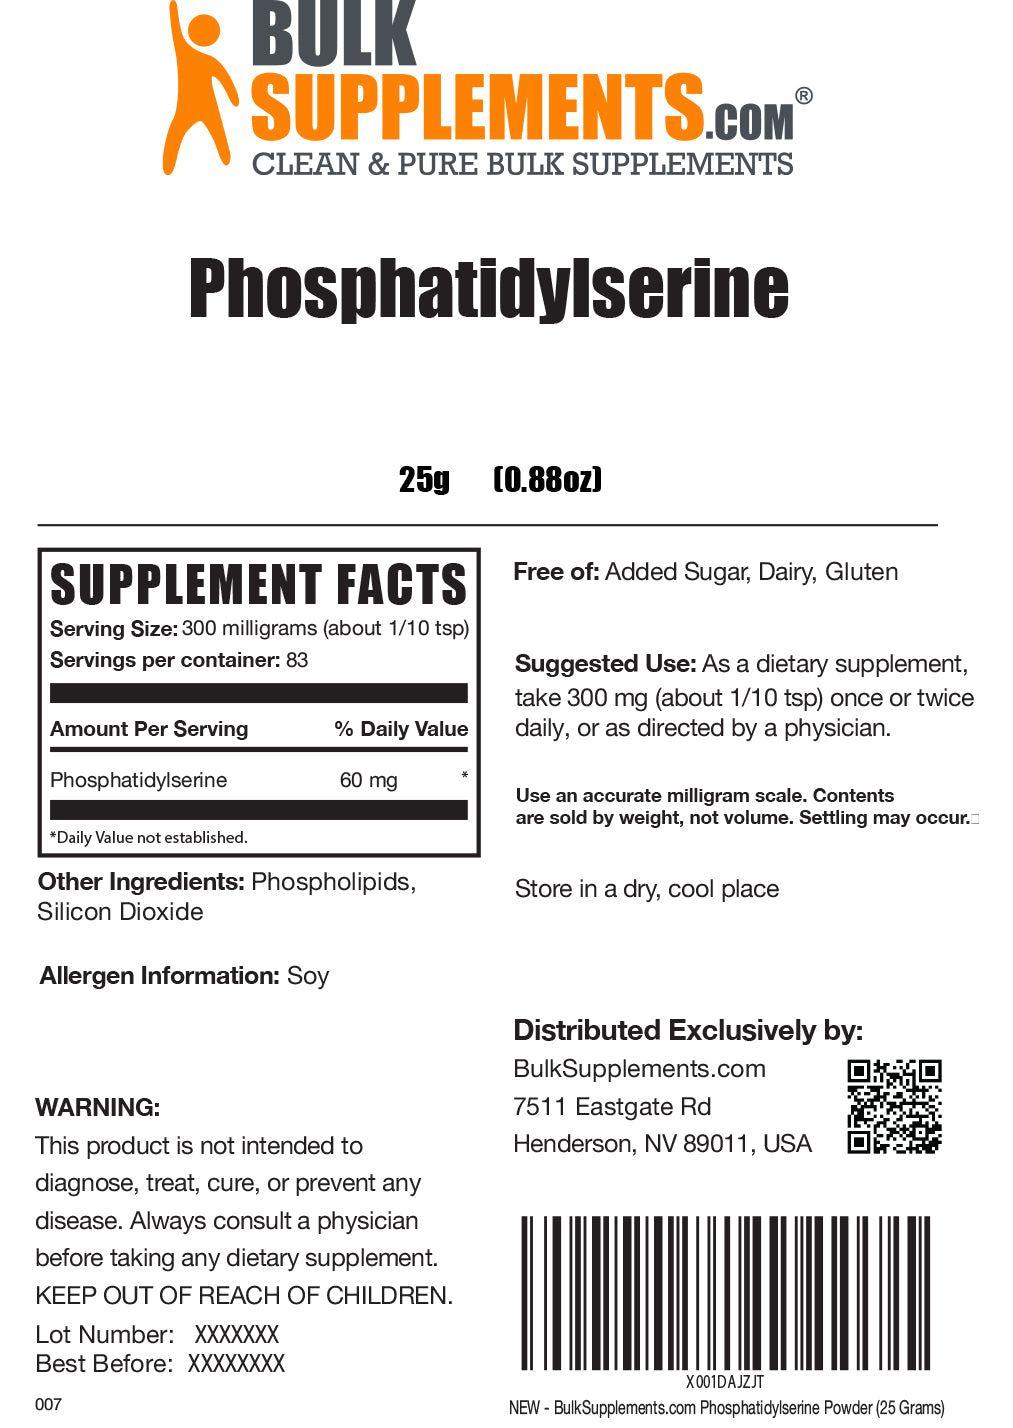 Phosphatidylserine powder label 25g